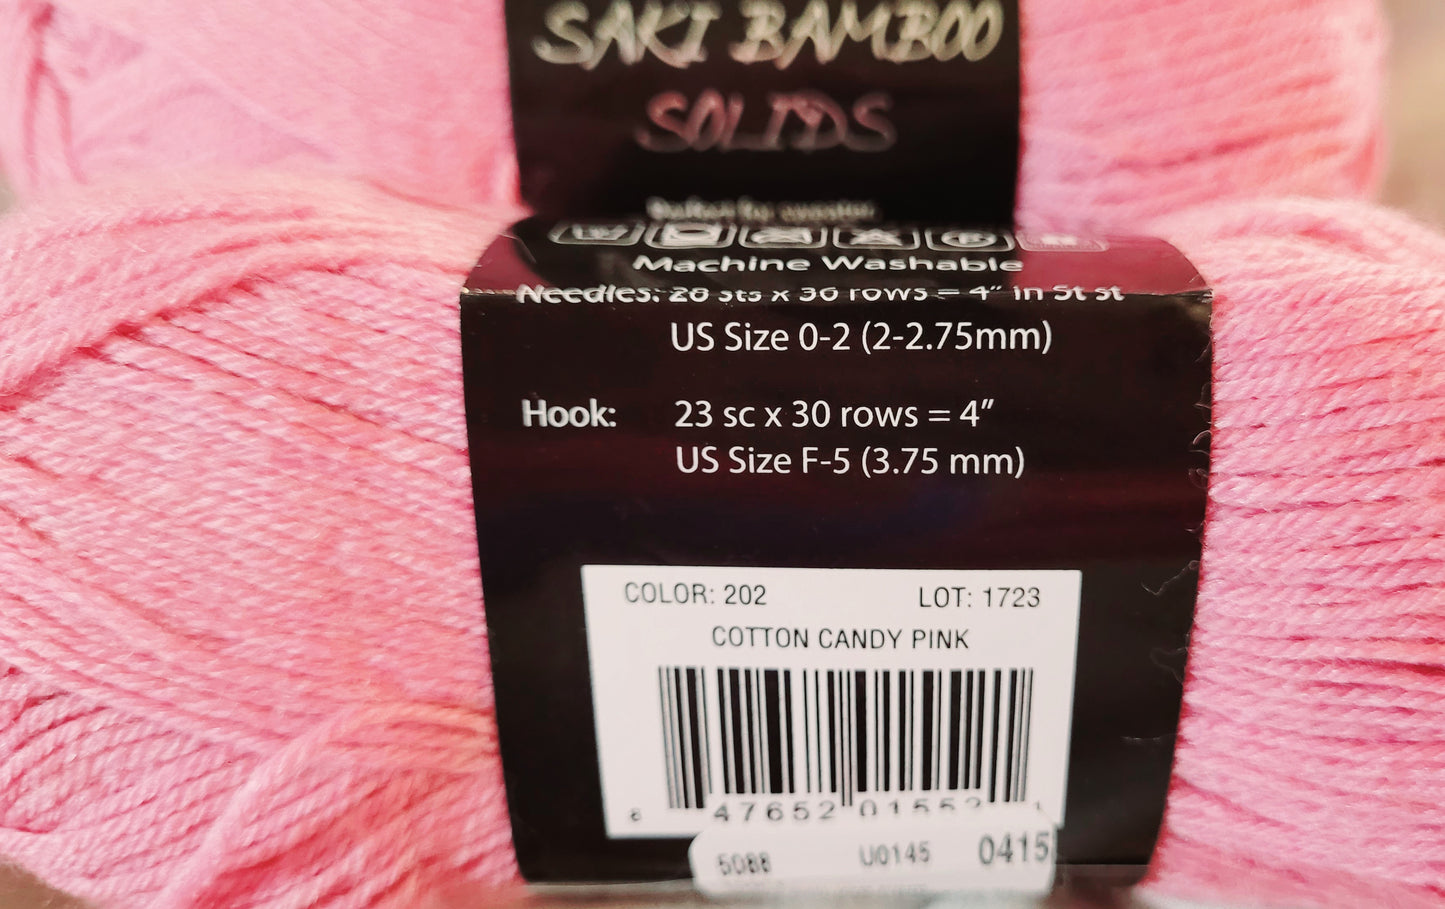 (3) Wisdom Yarns *Saki Bamboo Solids 690yds (Cotton Candy Pink)